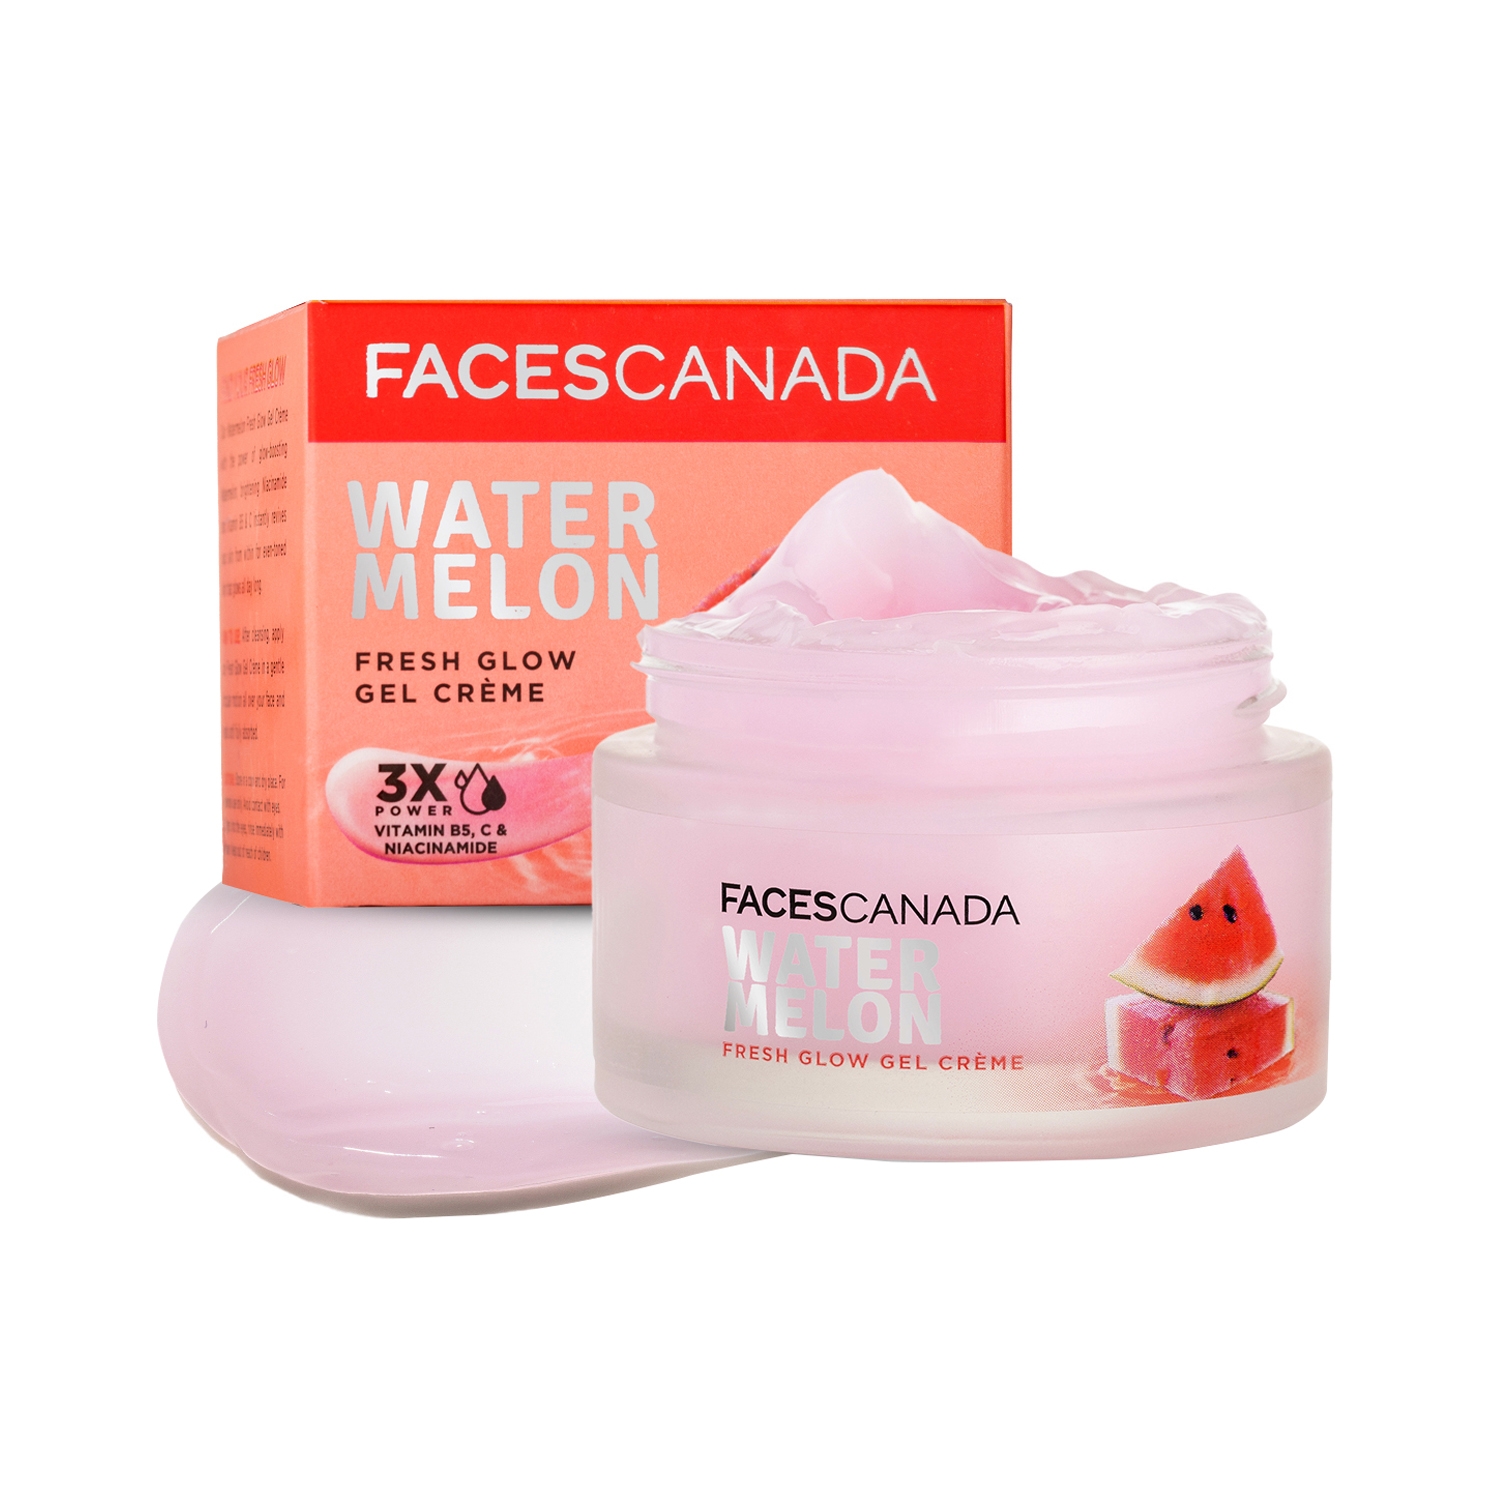 Faces Canada | Faces Canada Watermelon Fresh Glow Gel Creme (50g)